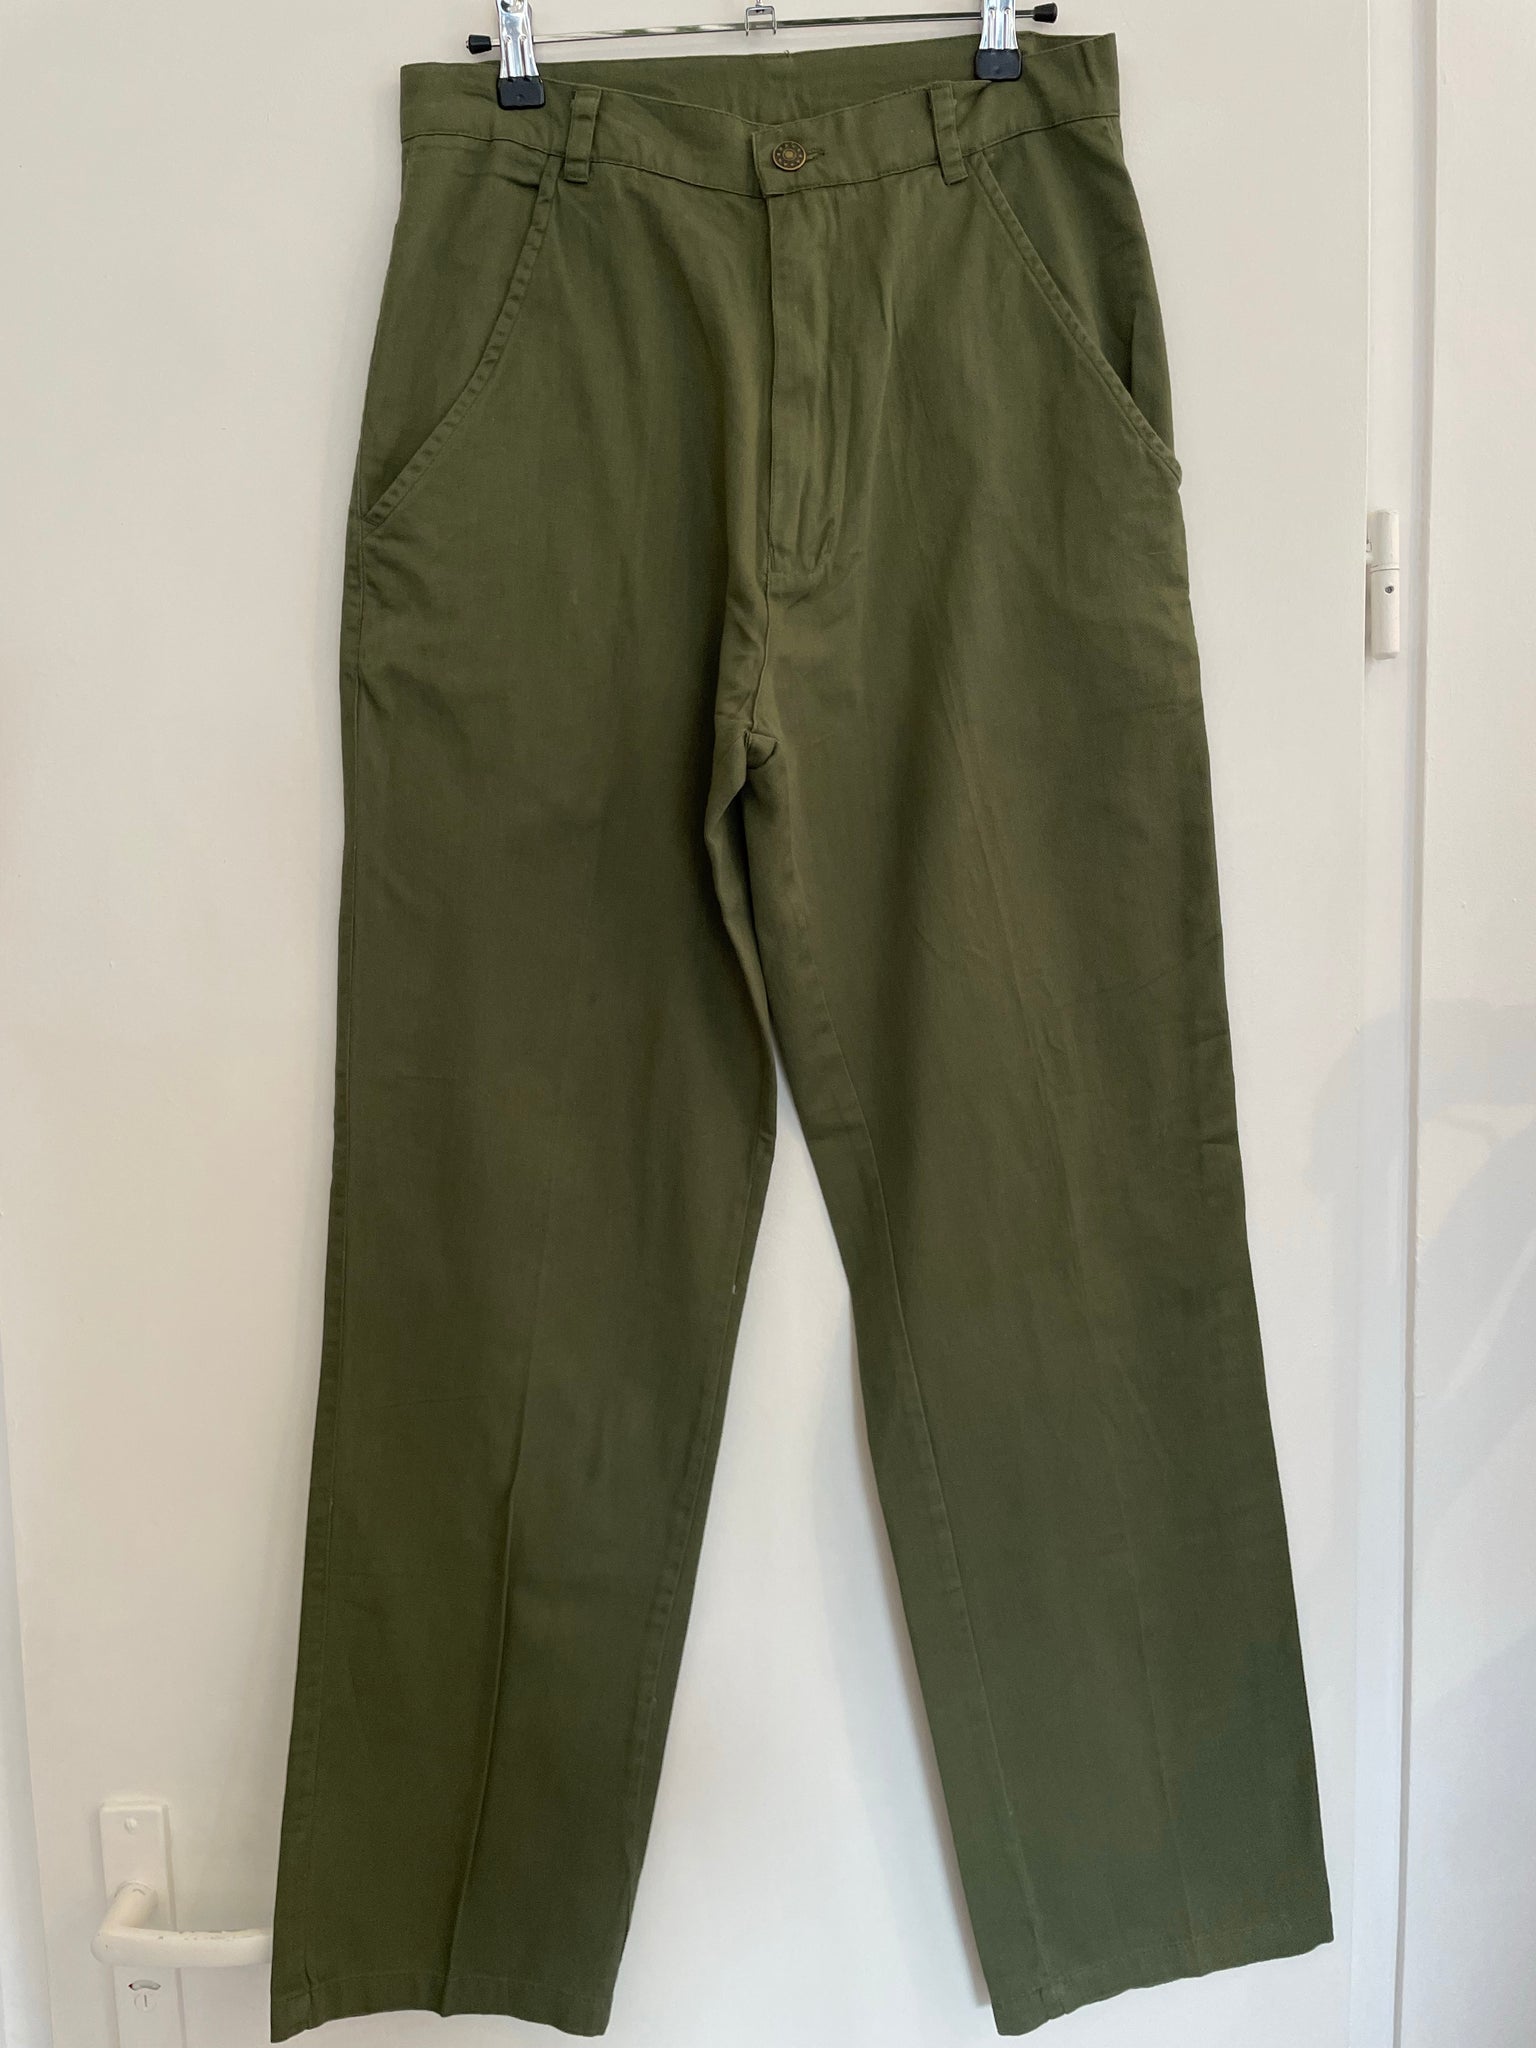 Green Cotton Pant 38